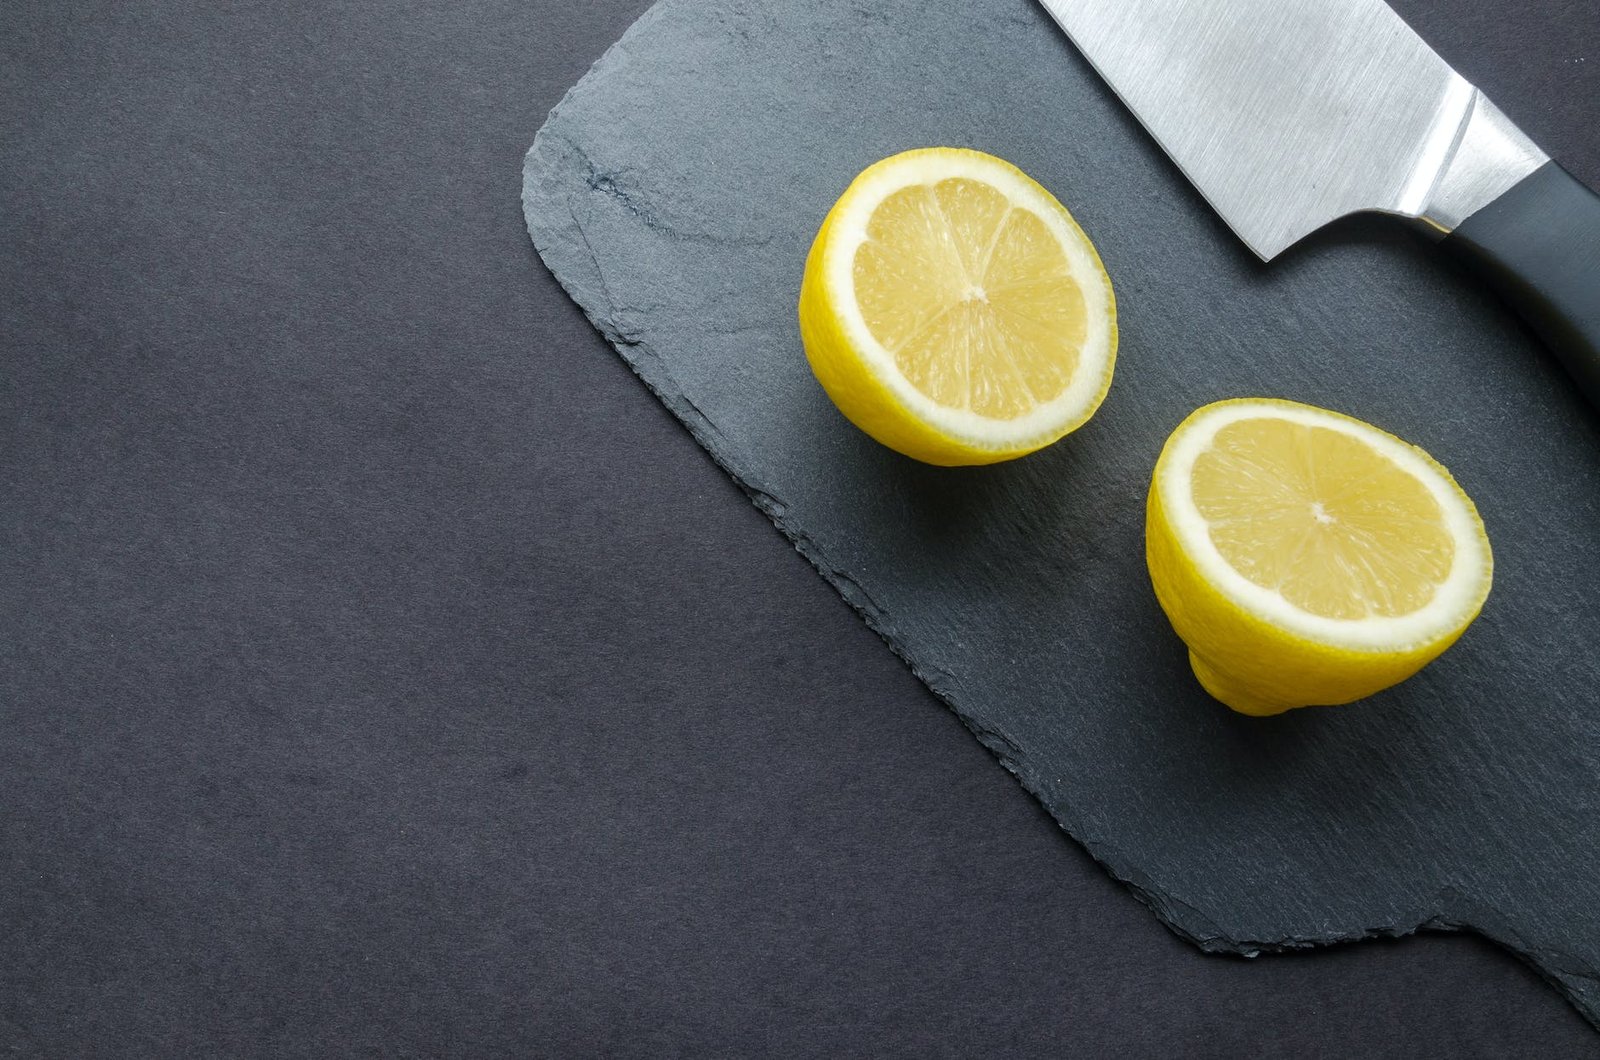 sliced lemon beside knife on top of black surface